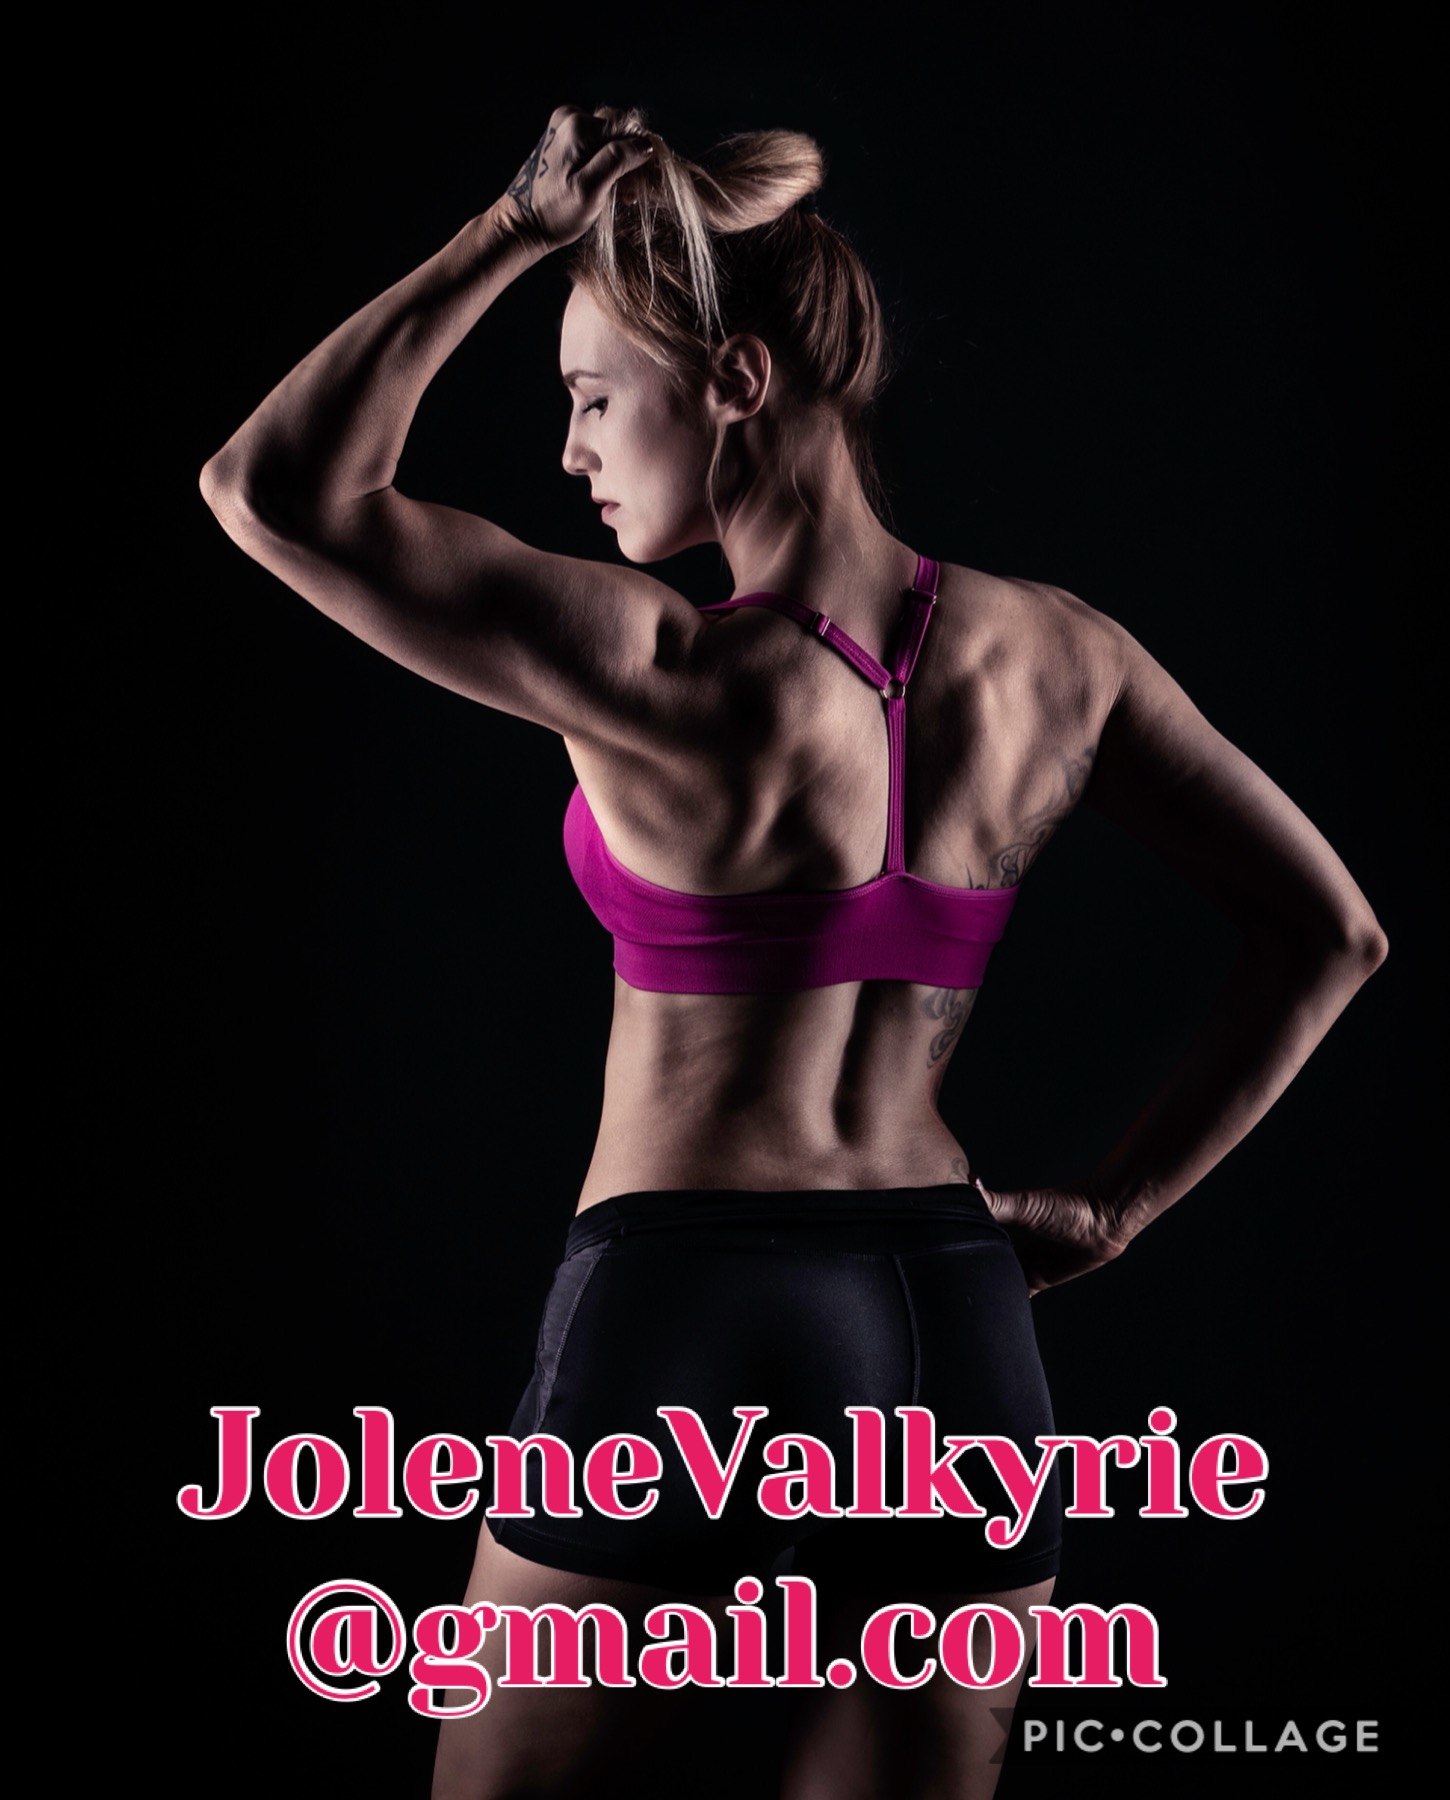 Jolene “The Valkyrie” Hexx